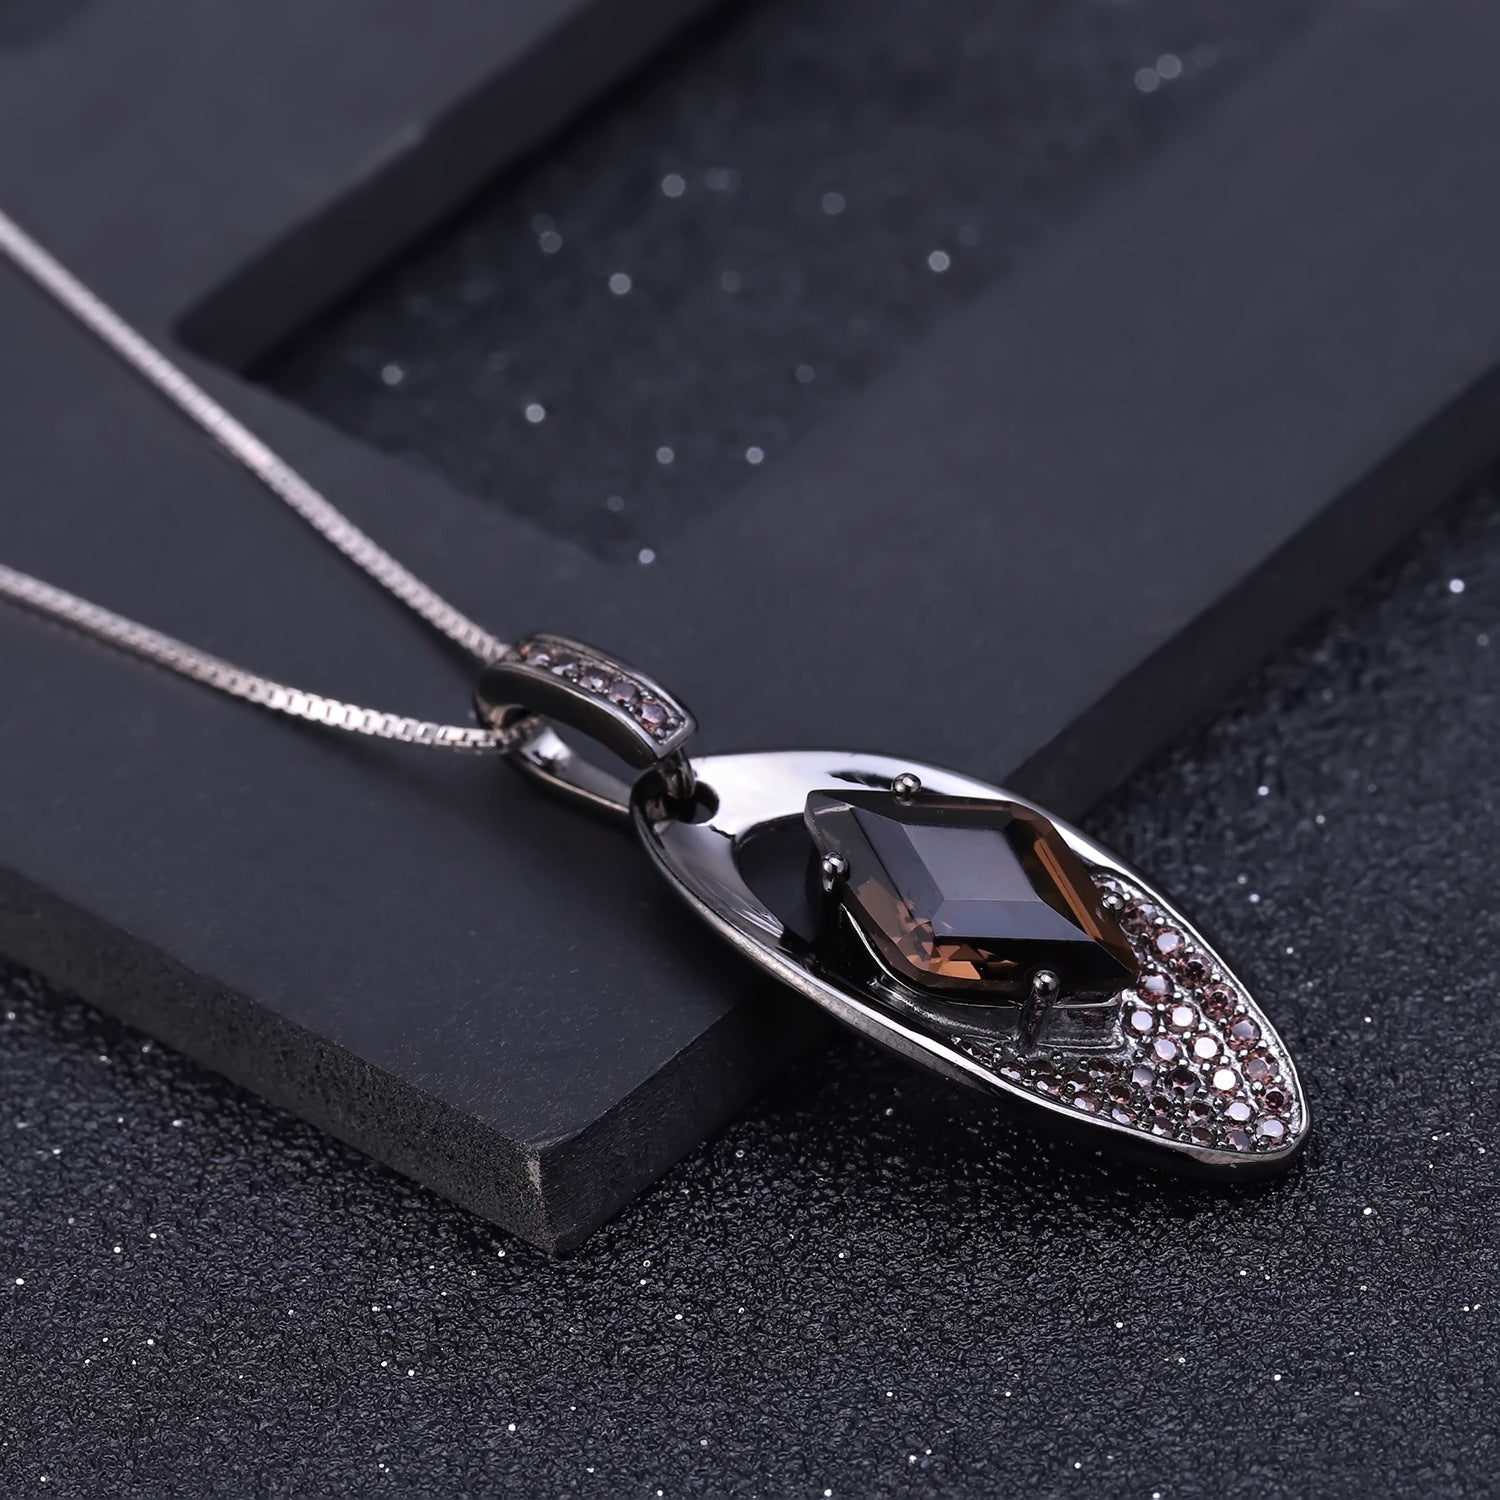 Italian Original Design Natural Tea Crystal Jewelry Pendant Silver Necklace for Women